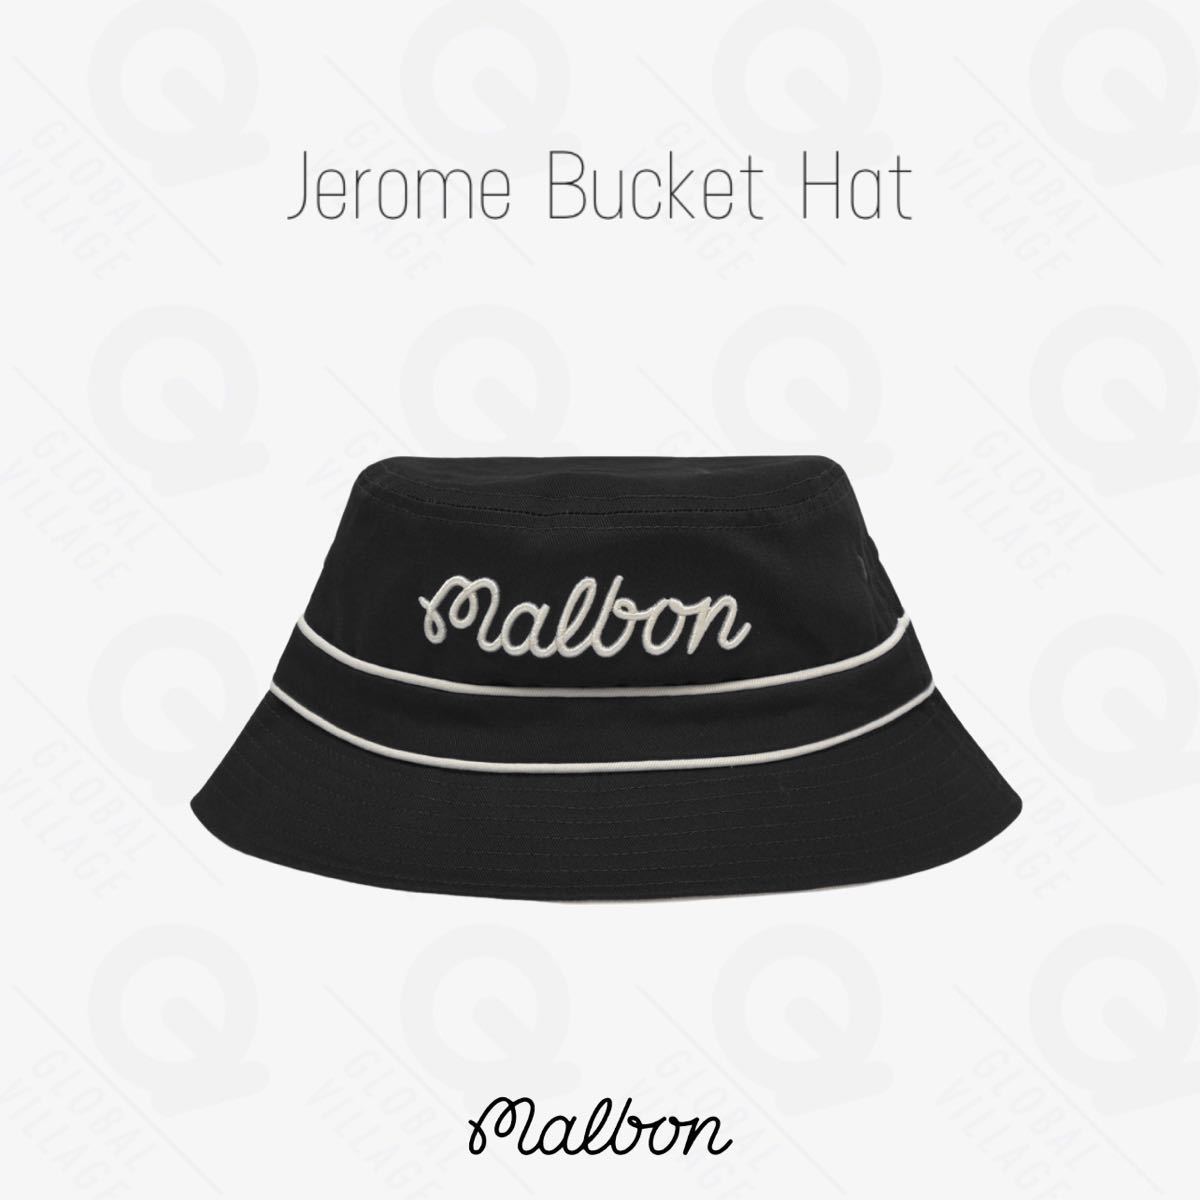 Malbon Jerome Bucket Hat - BLACK S/Mサイズ - imecam.gob.mx